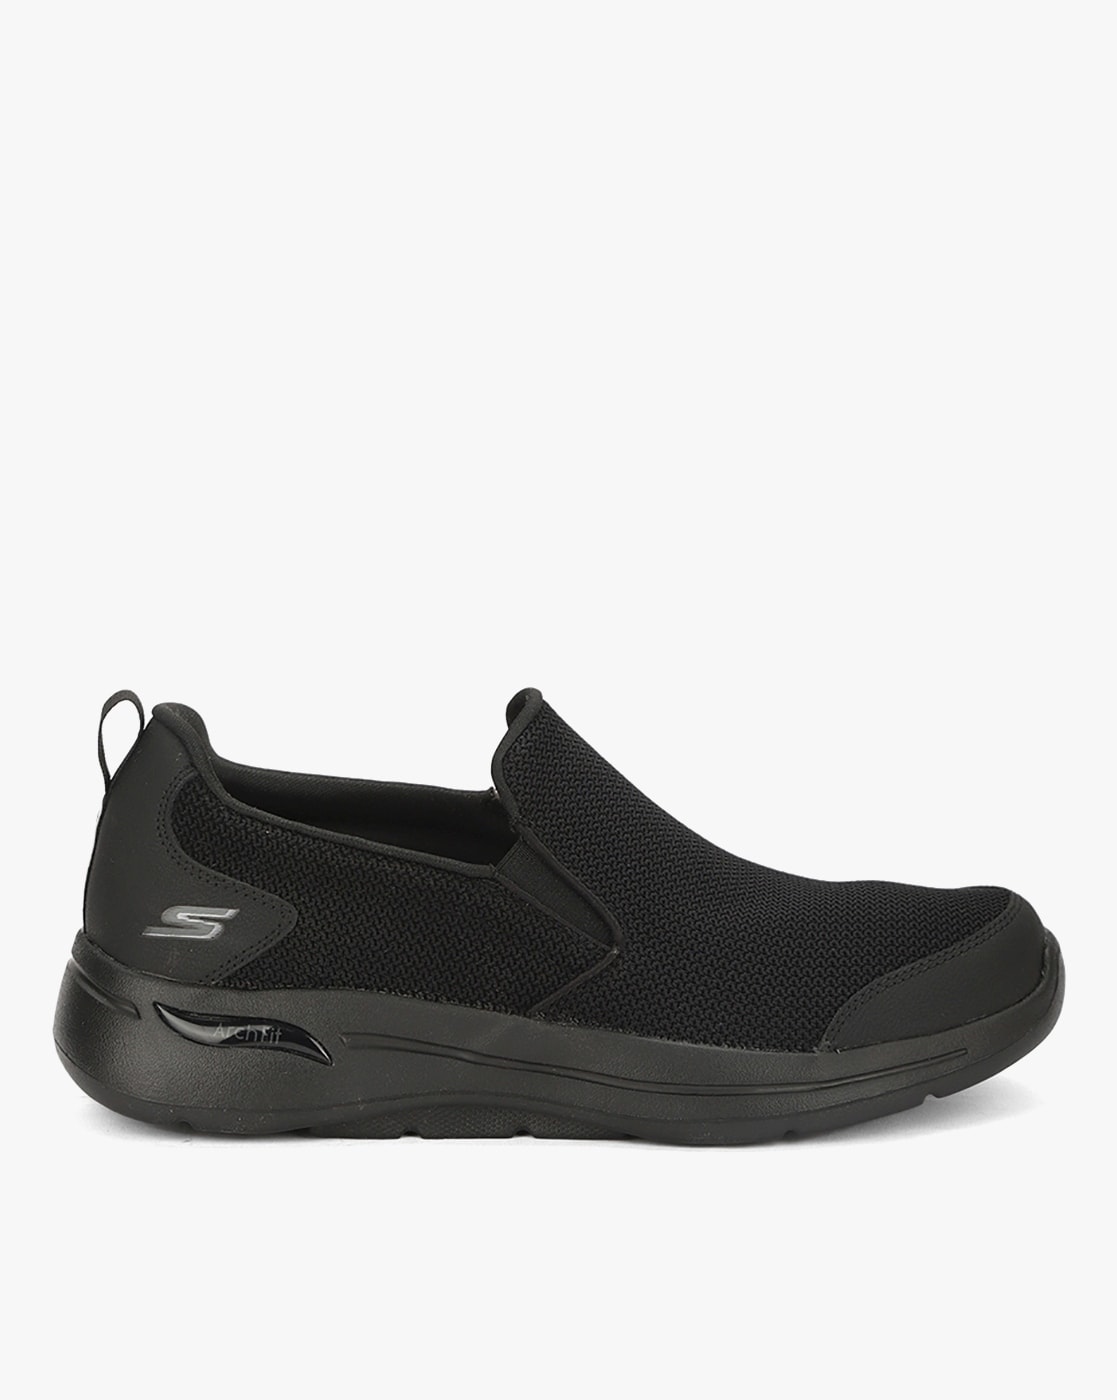 Black Casual Shoes Men by Skechers Online | Ajio.com